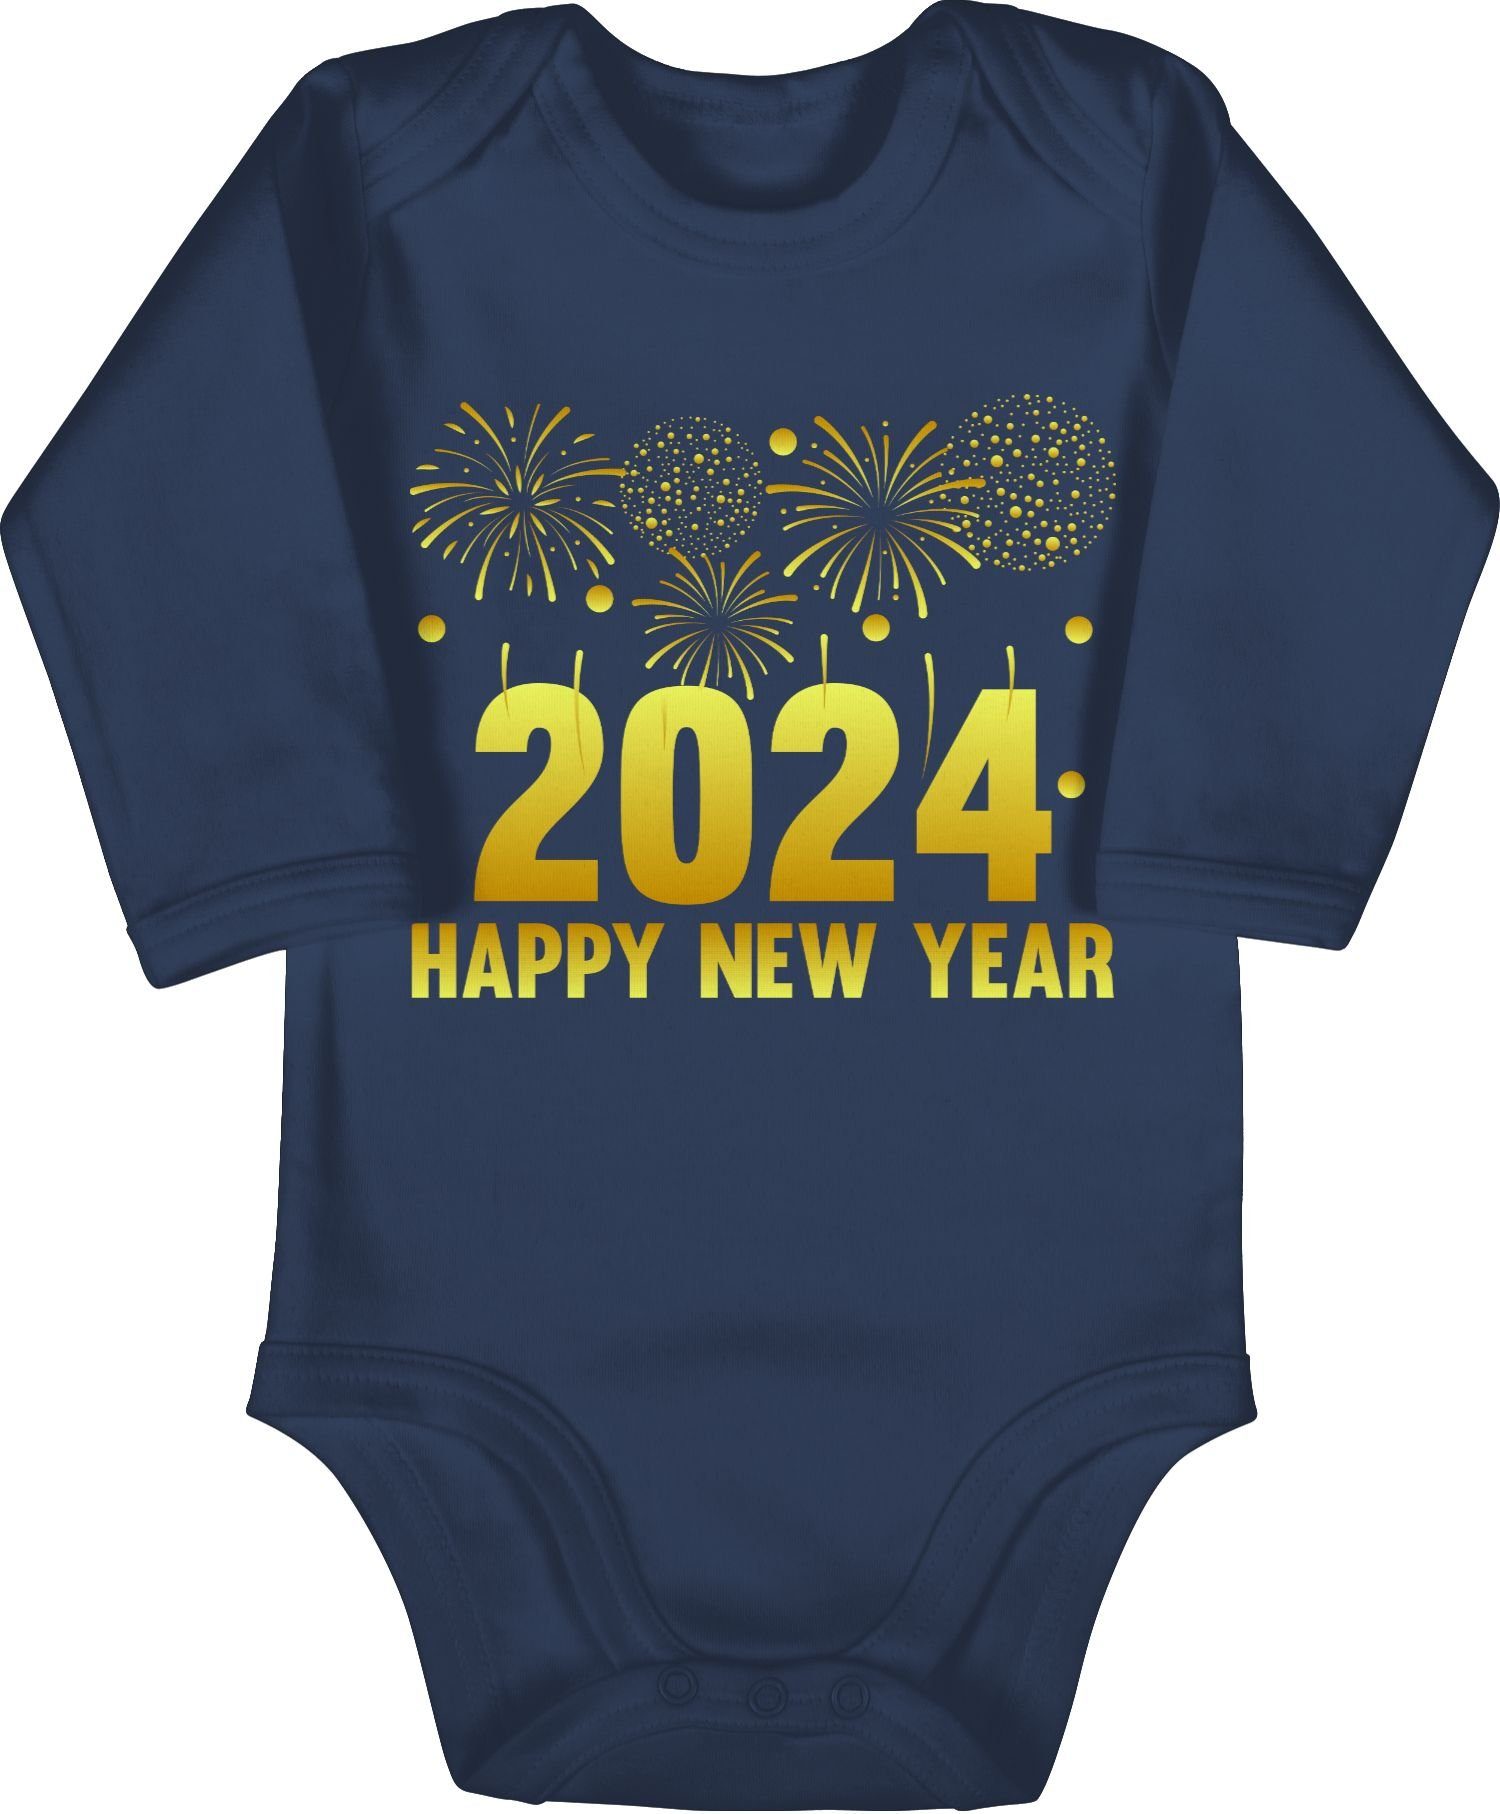 Shirtracer Shirtbody 2024 Happy New Year Feuerwerk gold Silvester Baby 3 Navy Blau